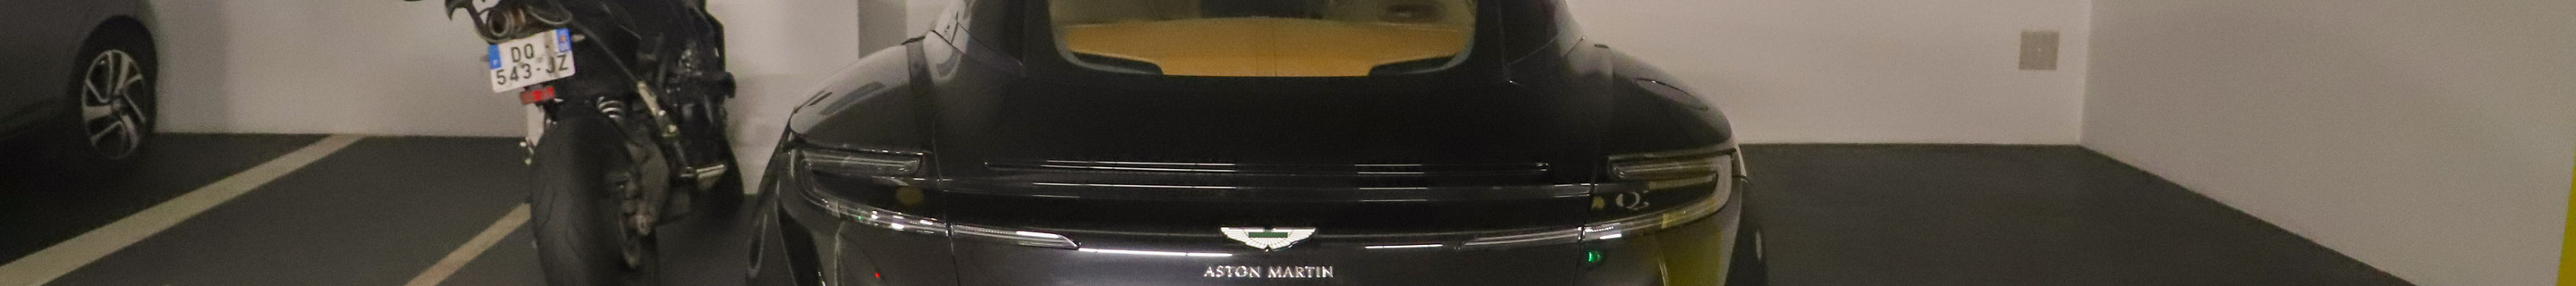 Aston Martin DB11 V8